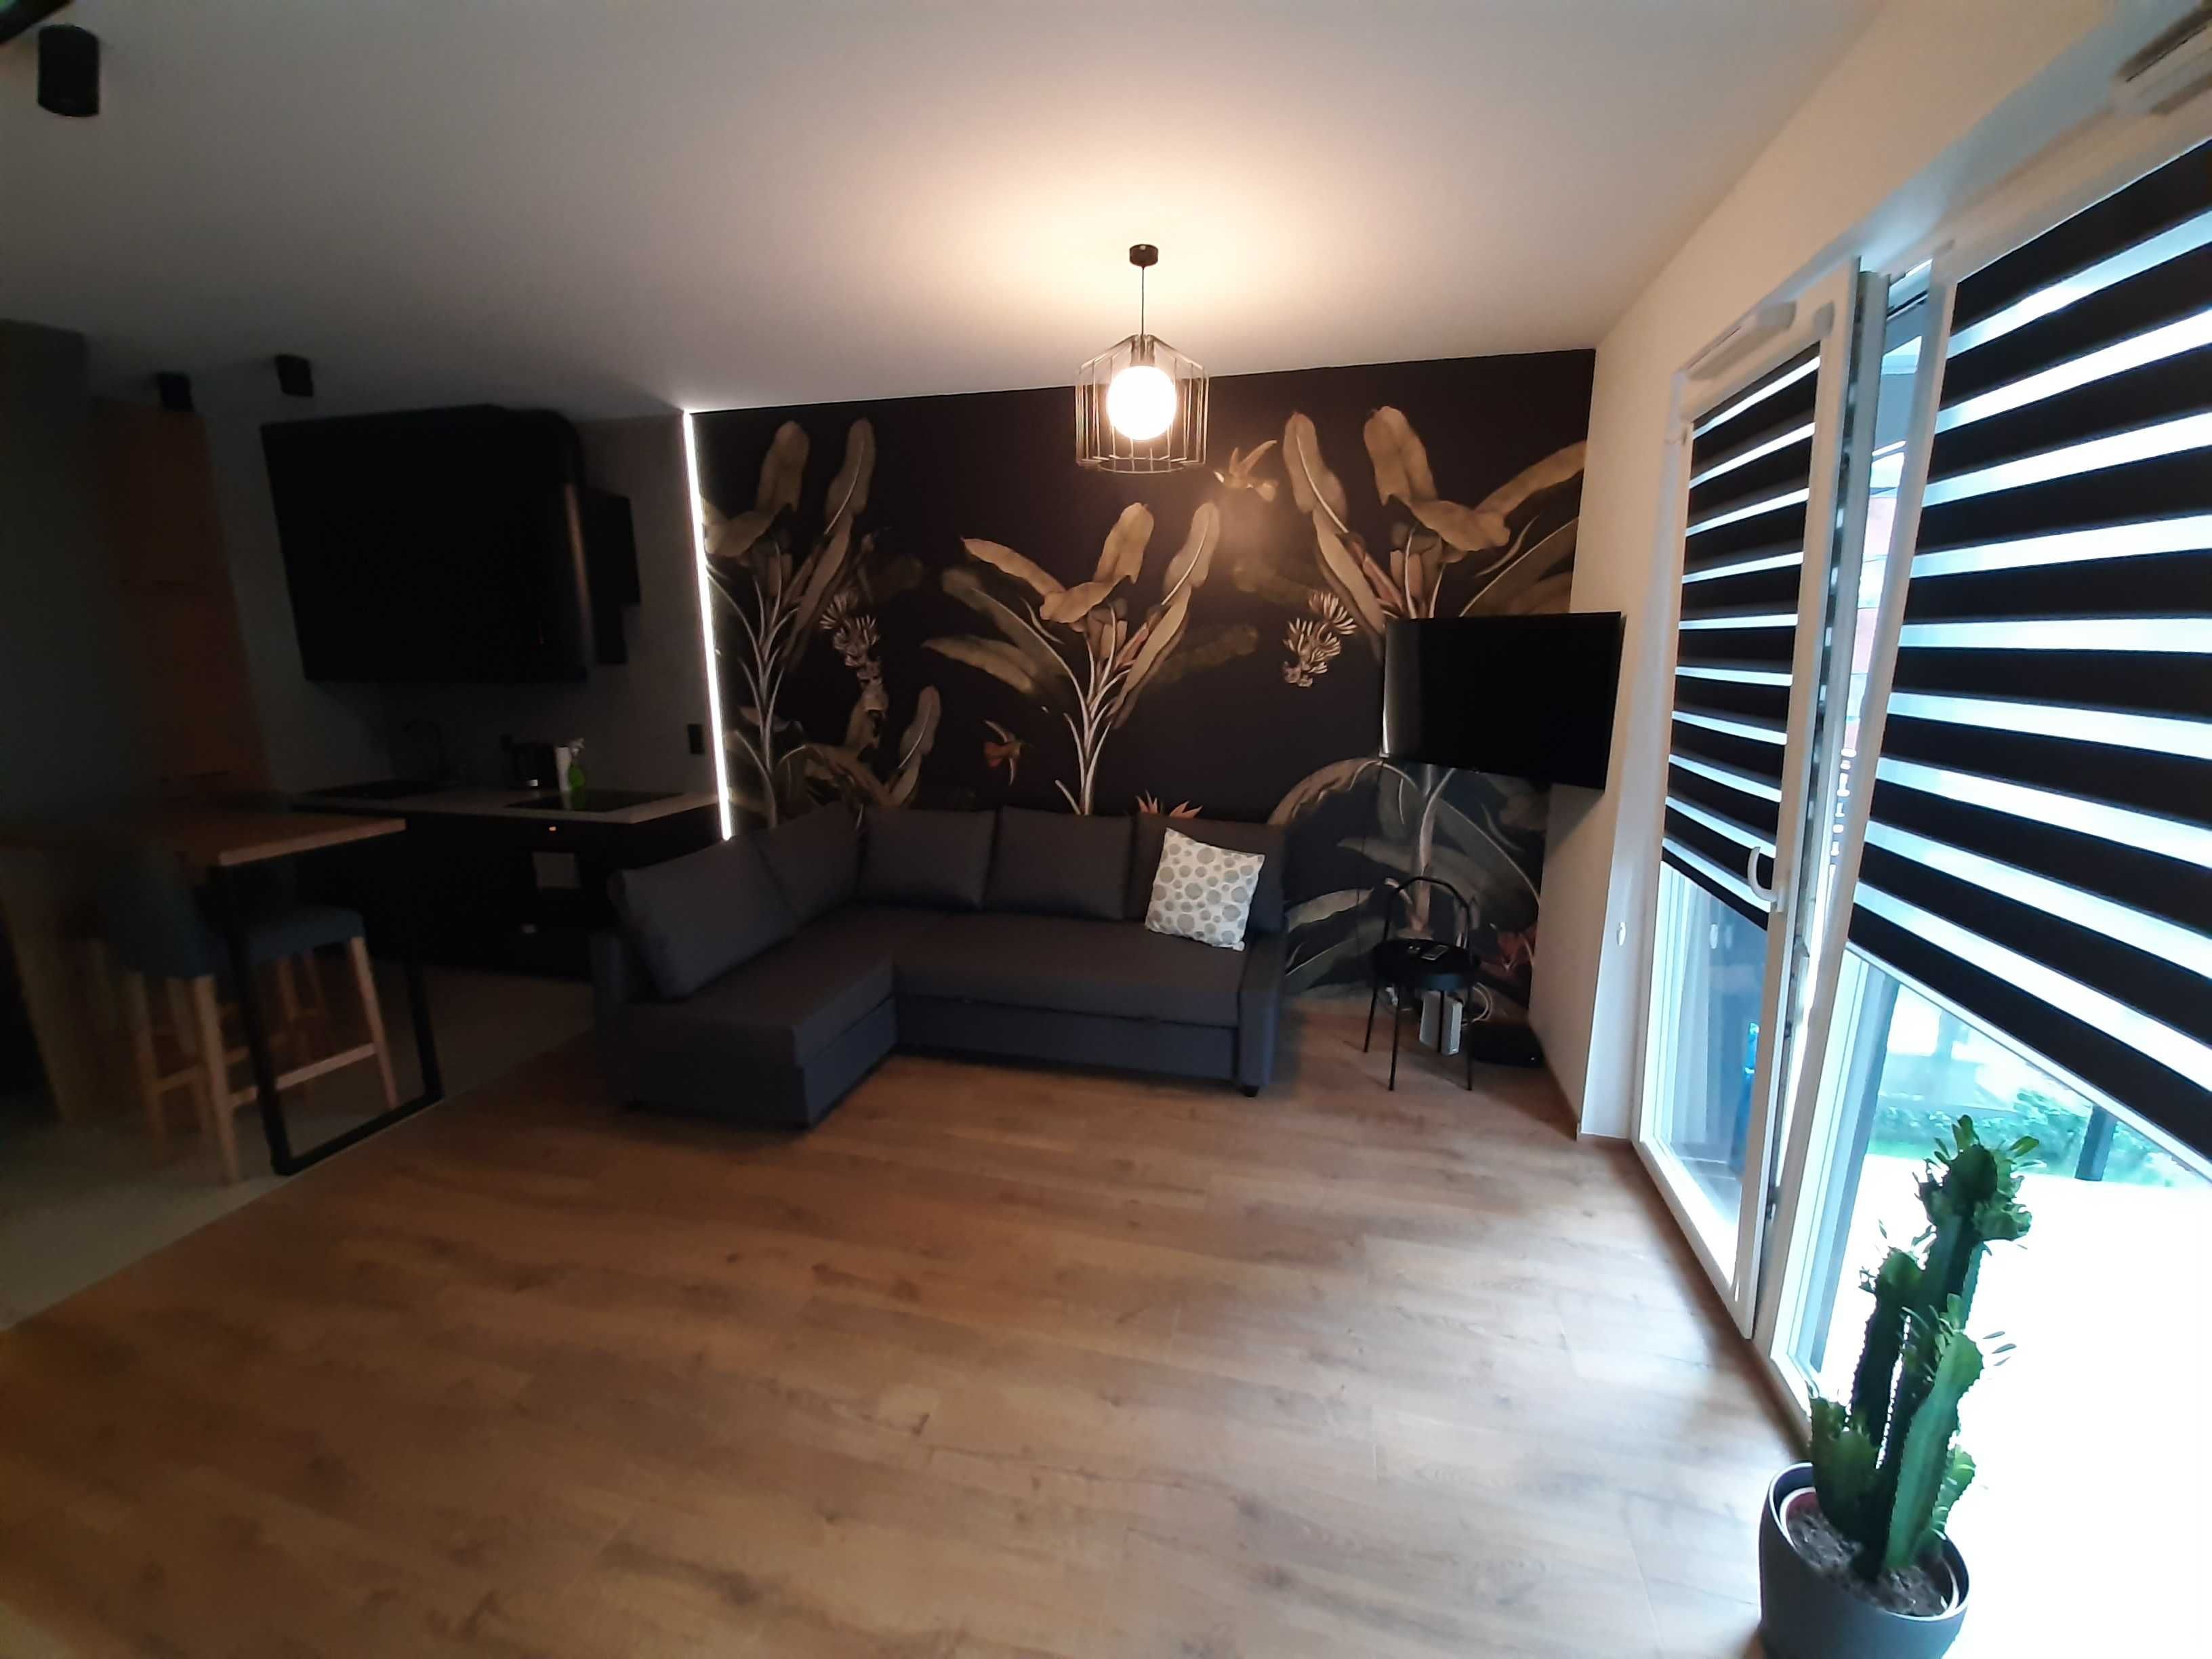 Jacuzzi i sauna apartament  "Deluxe" Gdańsk – RELAX Apartments